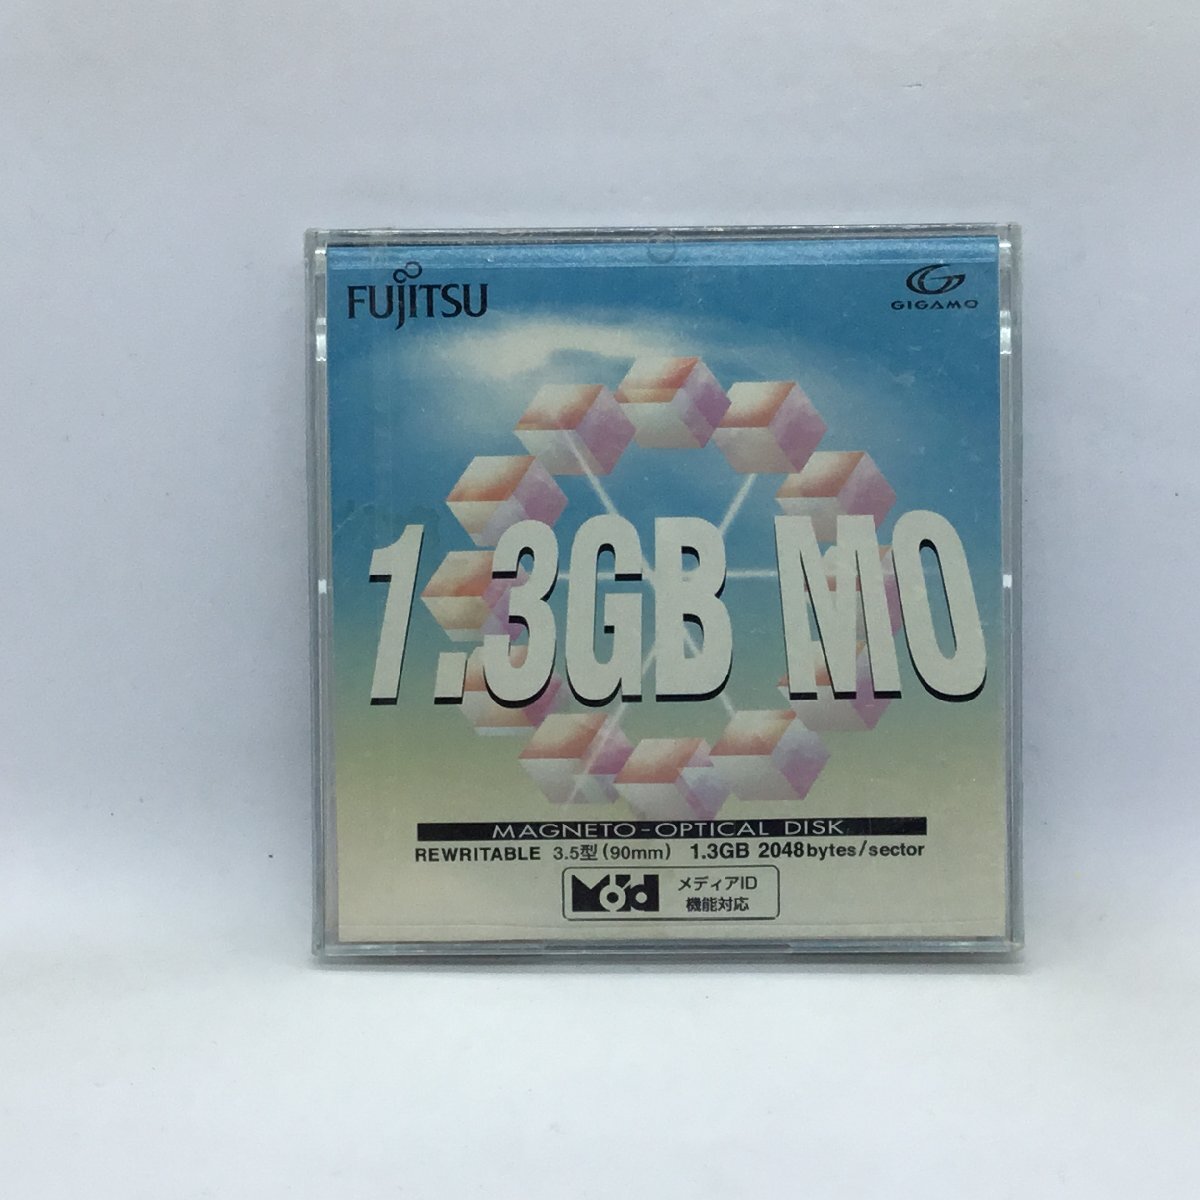  нераспечатанный * Fujitsu FUJITSU MO диск картридж 1.3GB MR13G 0243810 (MO)